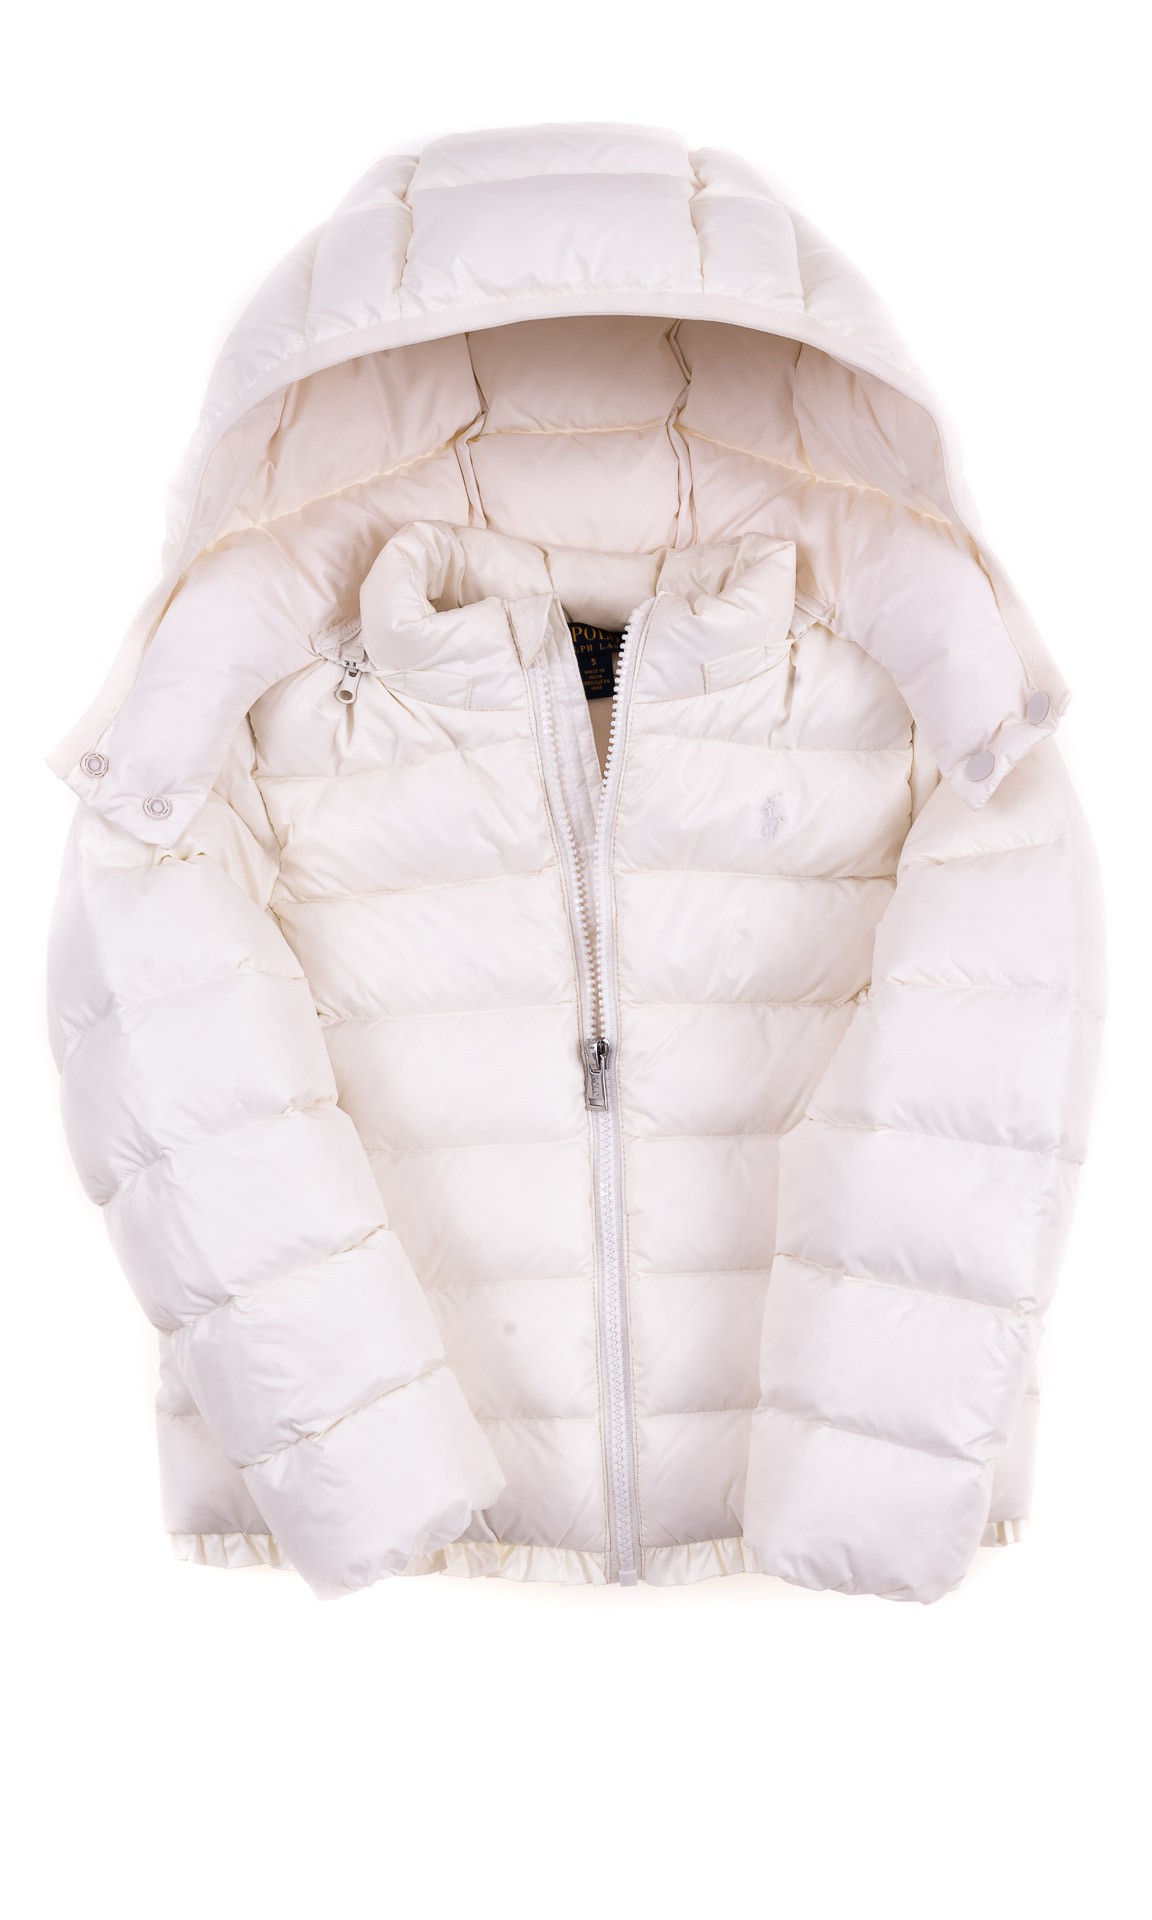 white polo ralph lauren jacket